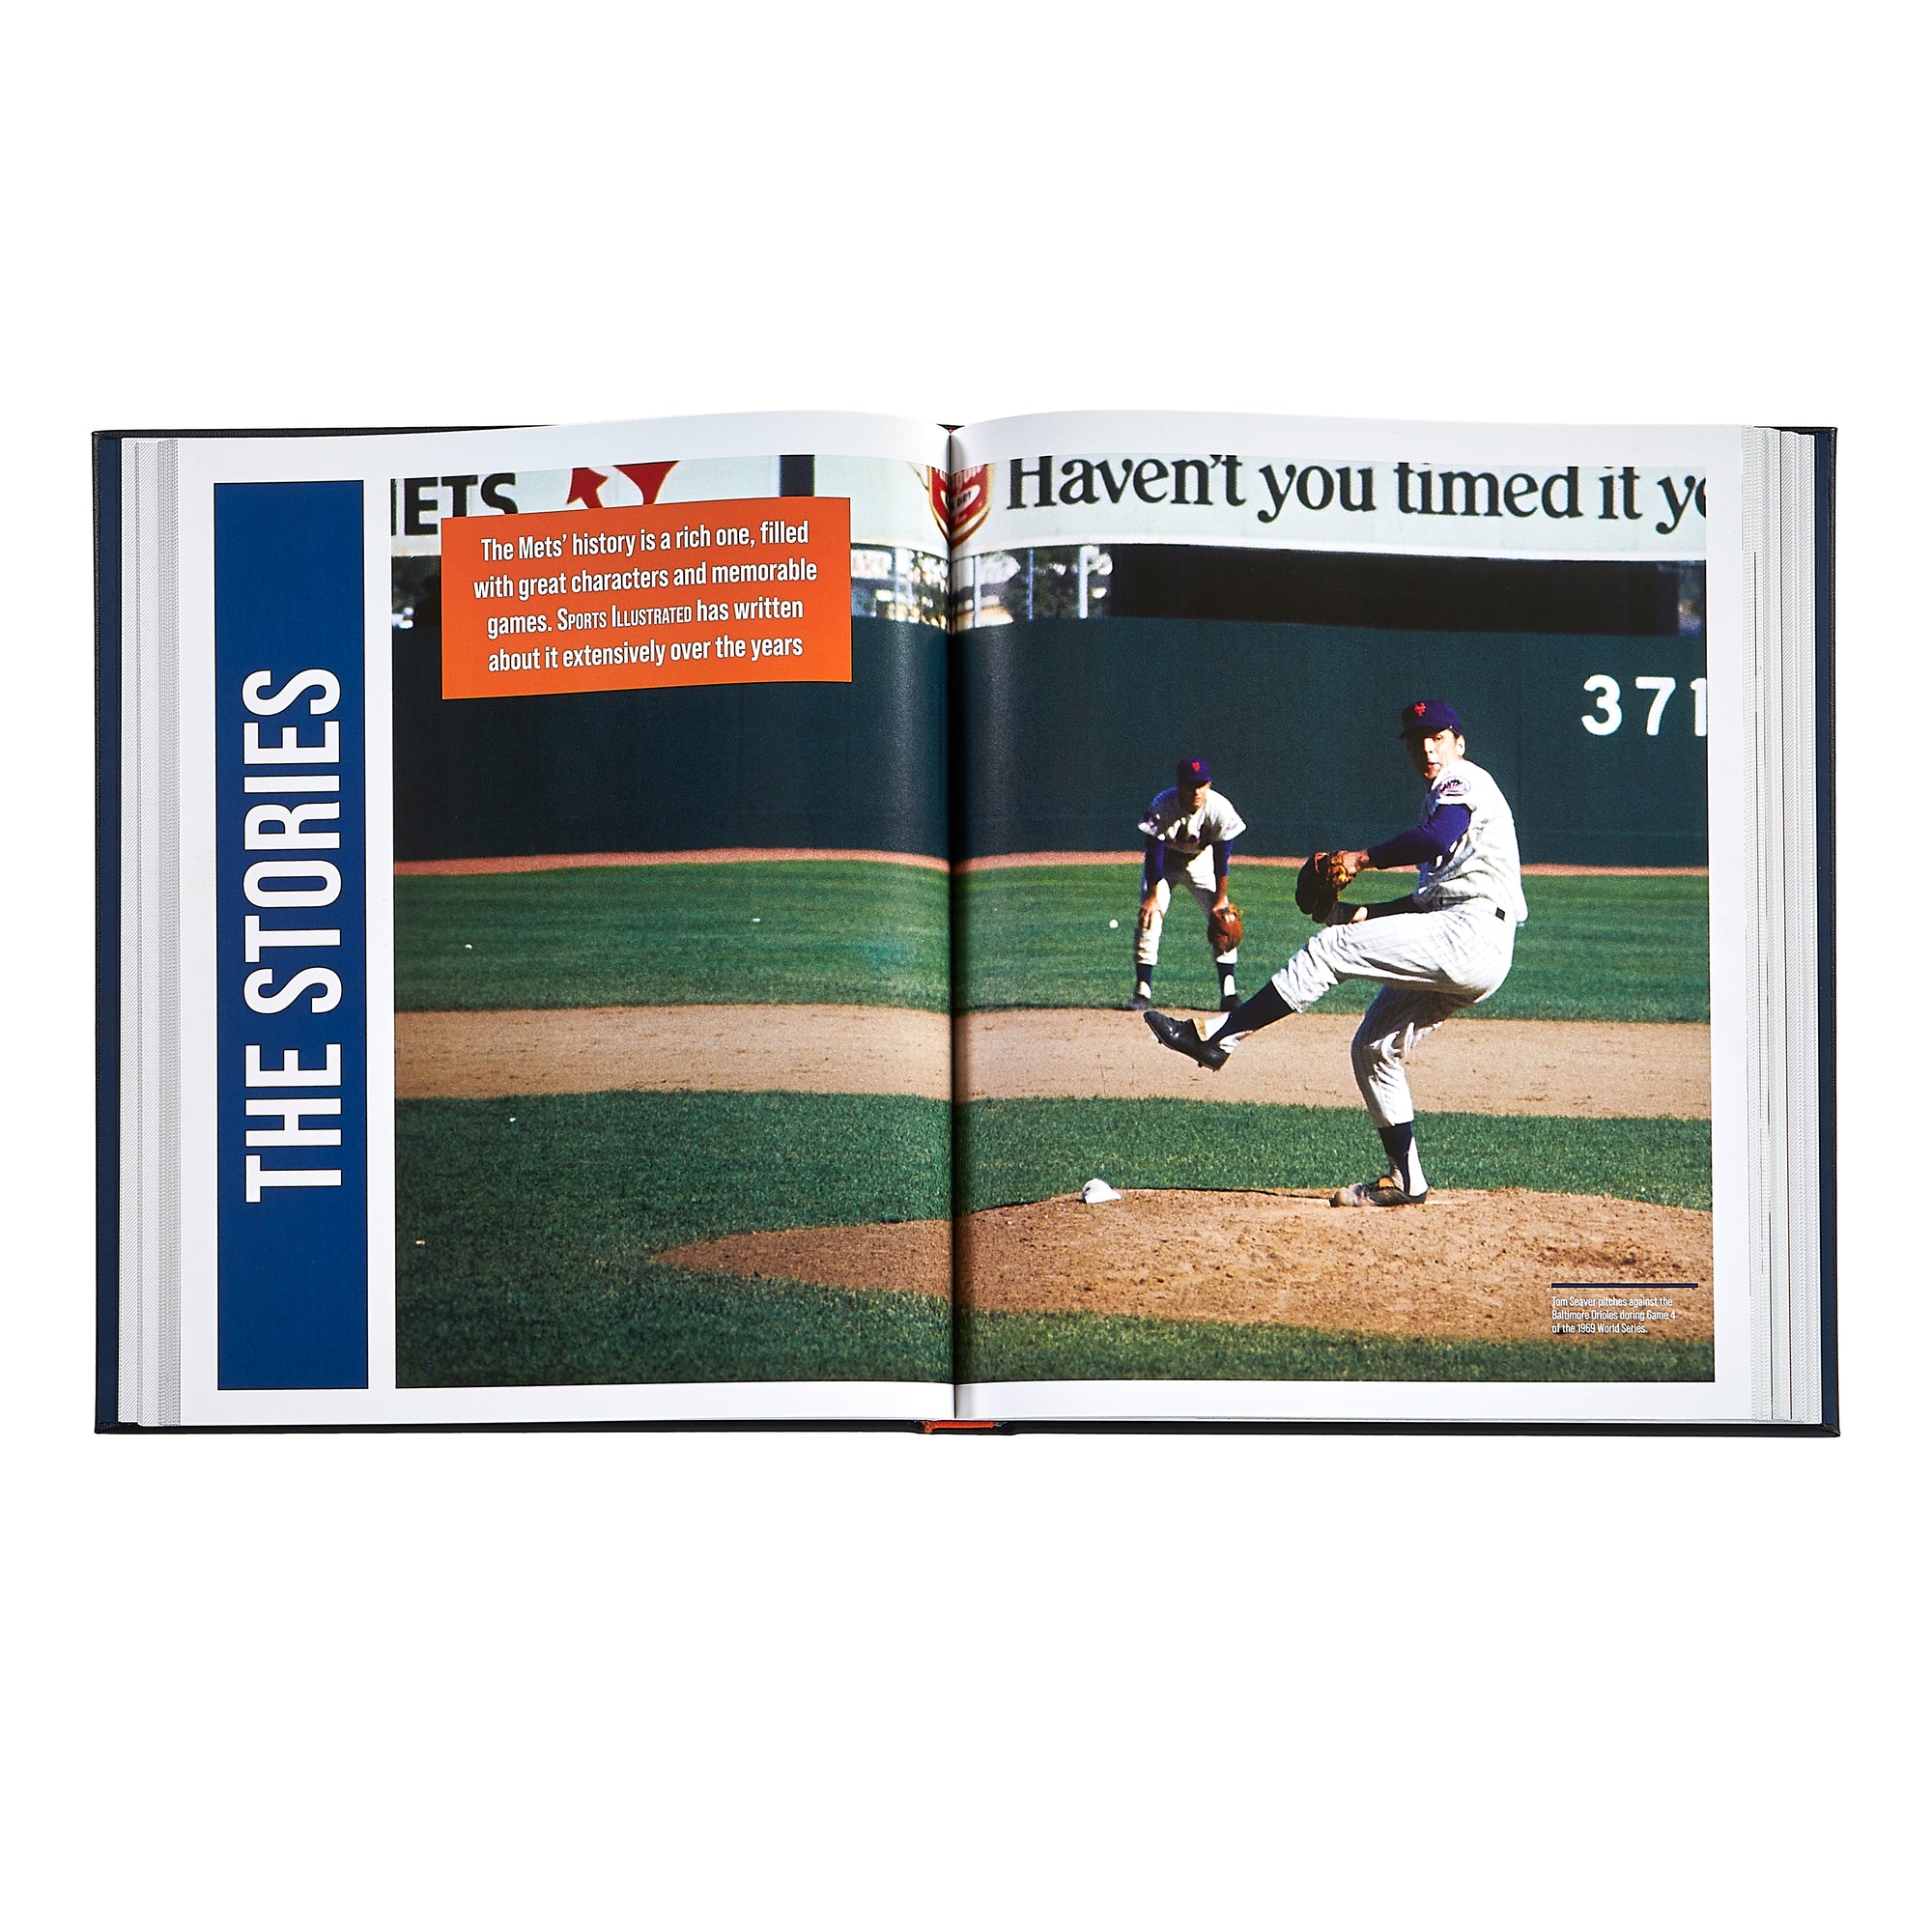 New Seaver Book Available - New York Mets - Medium